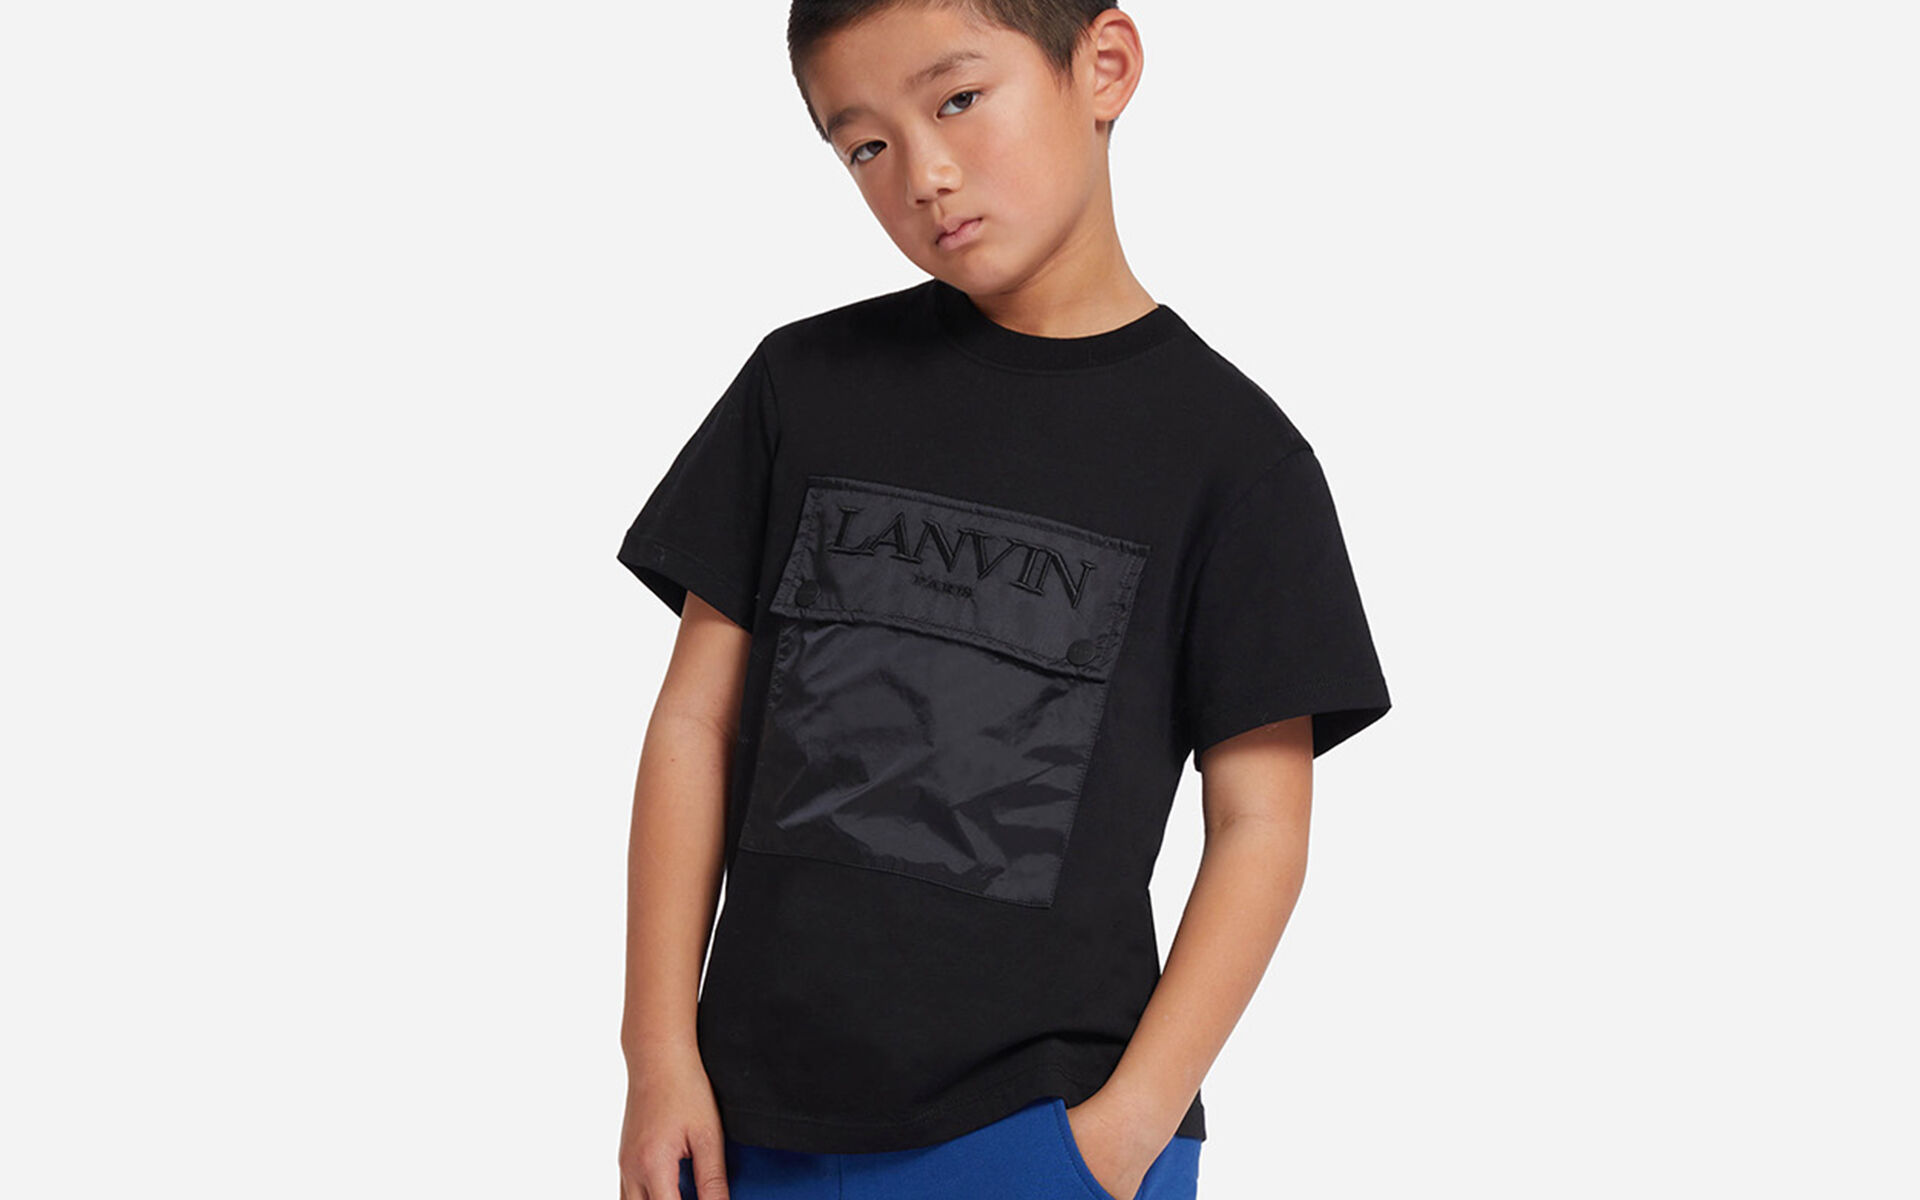 Lanvin Kids - Luxury Brands for Kids